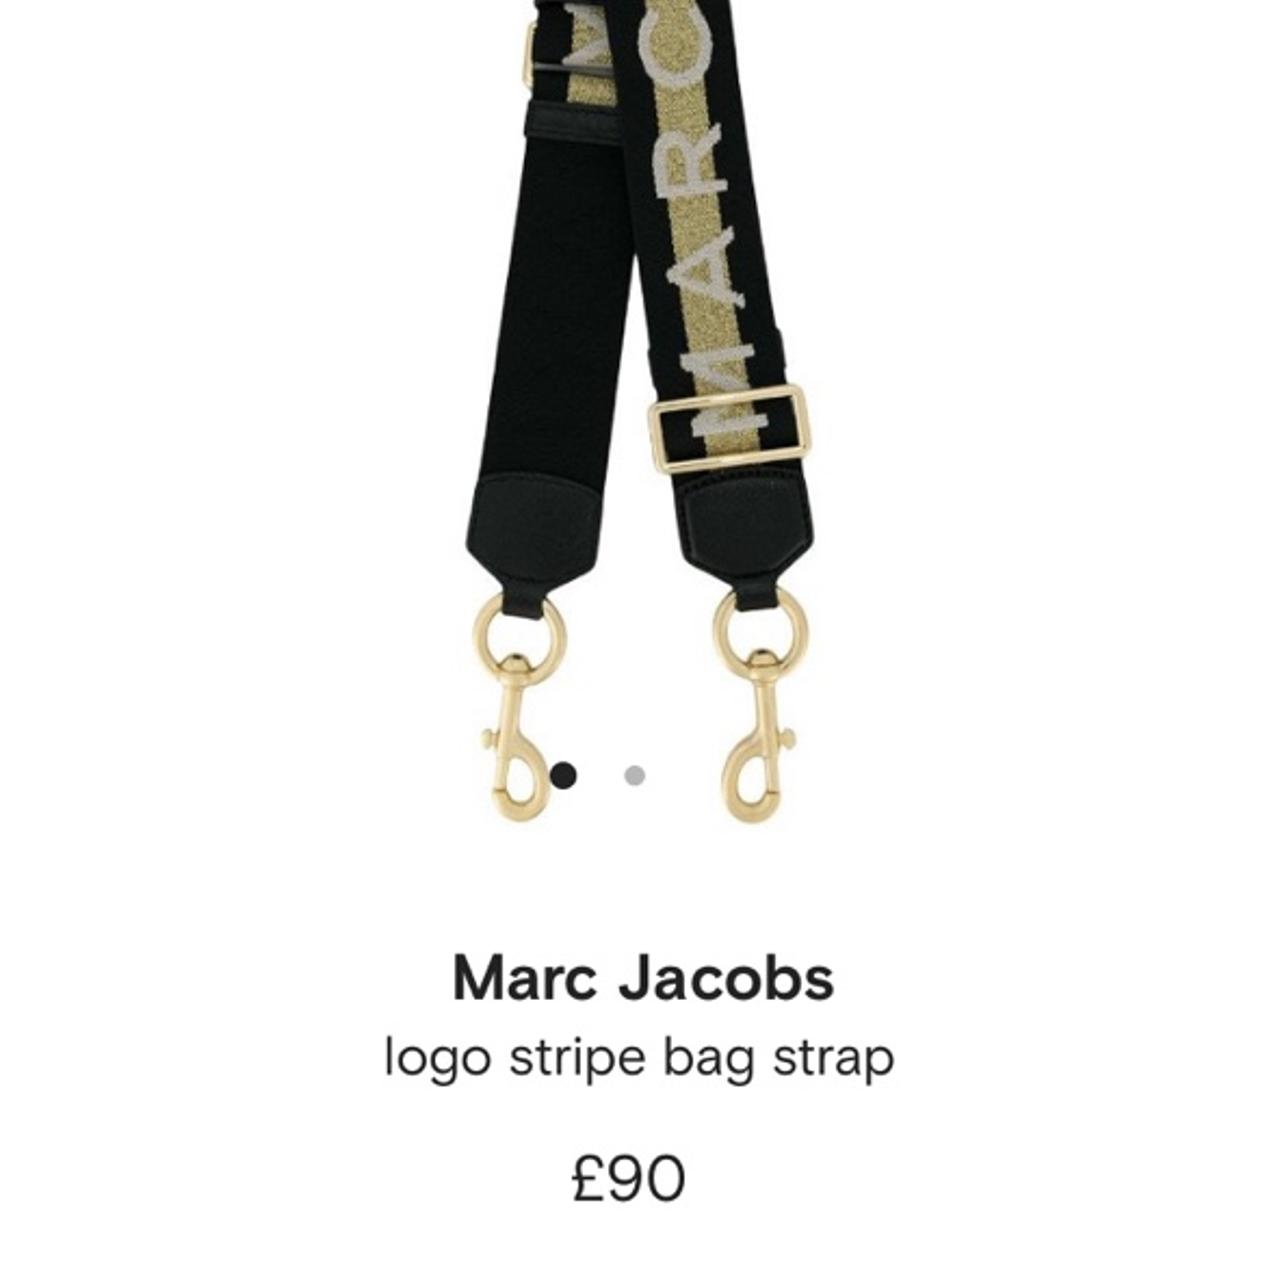 Marc Jacobs Women's Bag Straps